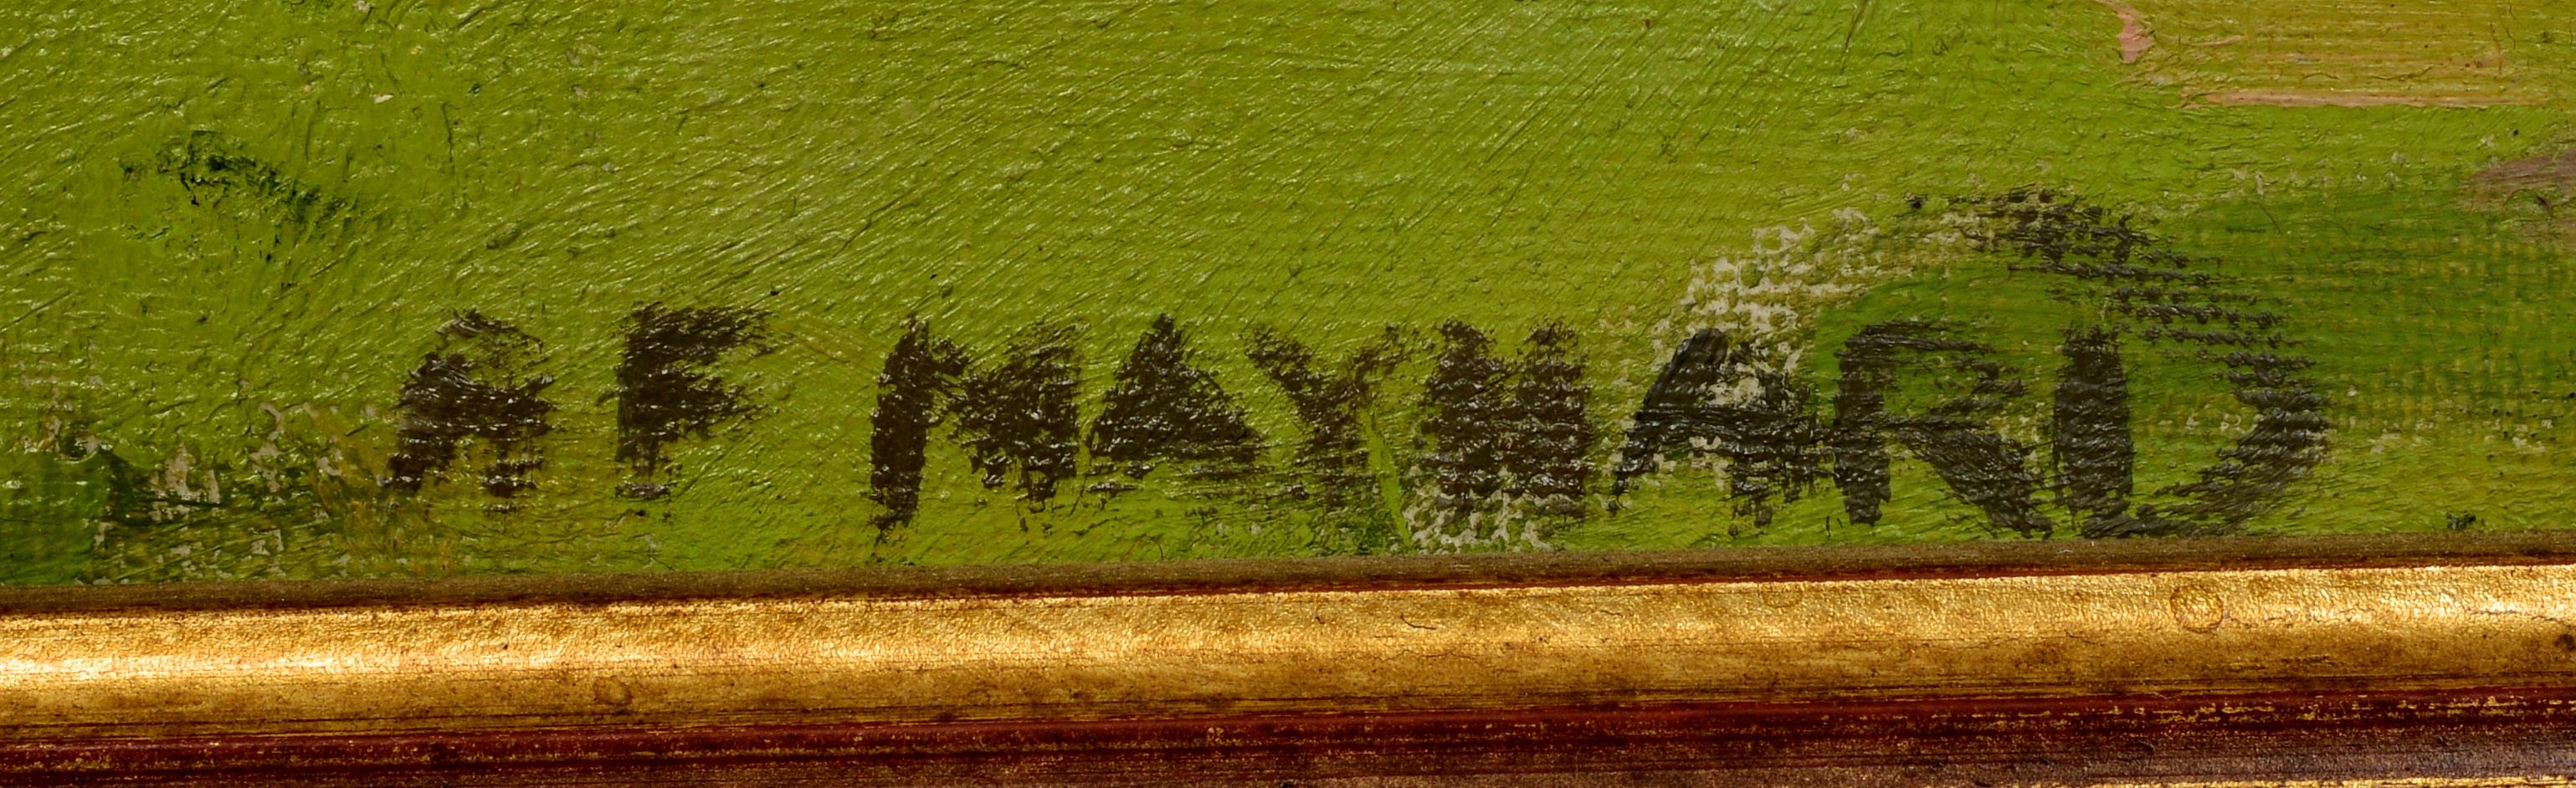 Arthur F. Maynard, Signed Oil on Canvas, a Rural Landscape 1